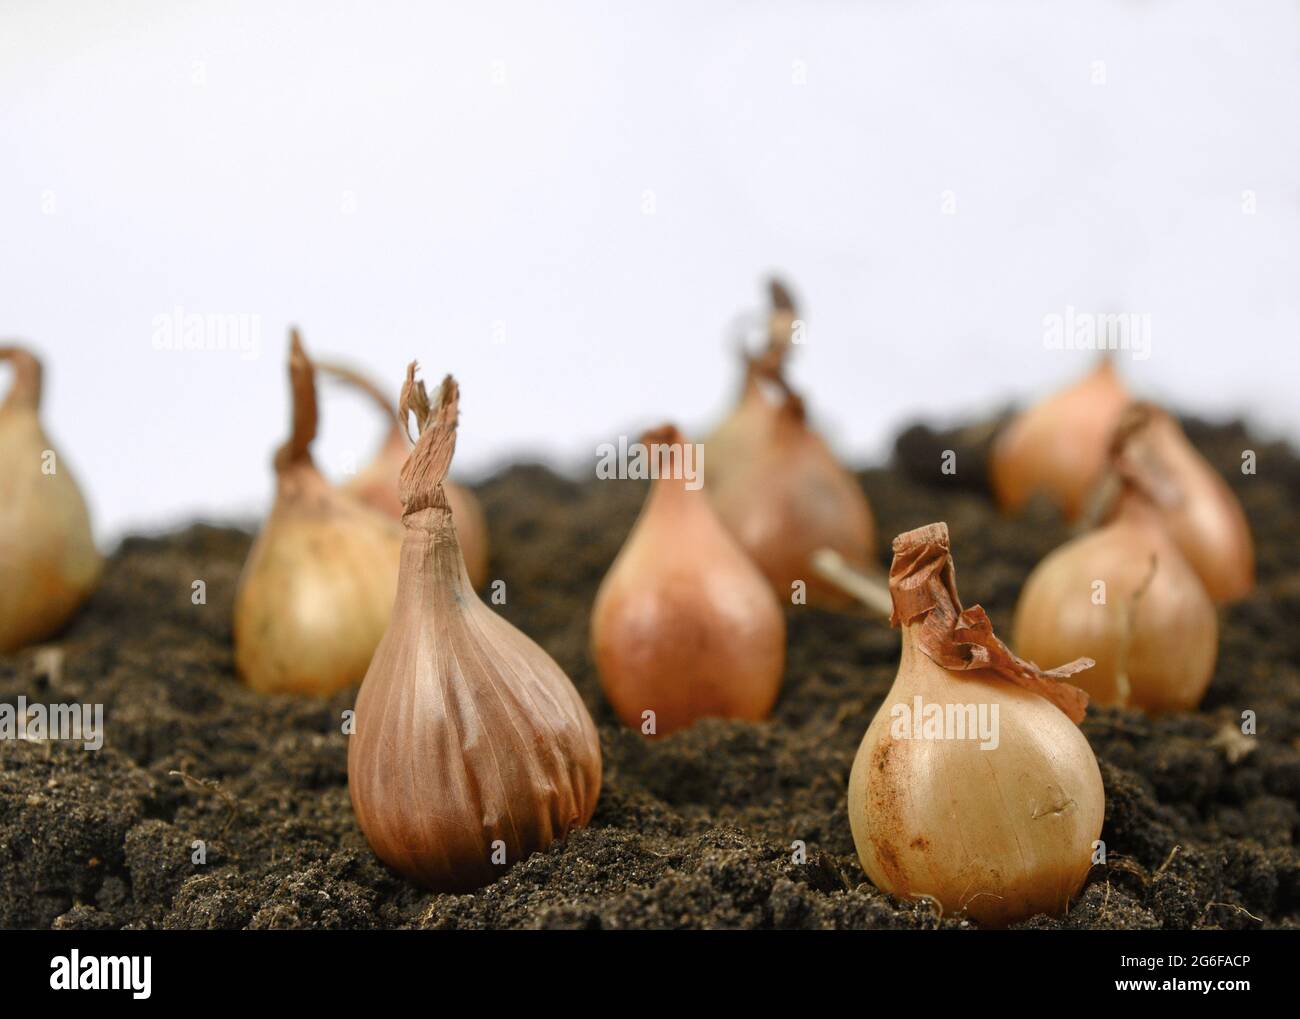 Onion seedlings growing in rows on dark soil. Springtime, gardening concept. Stock Photo